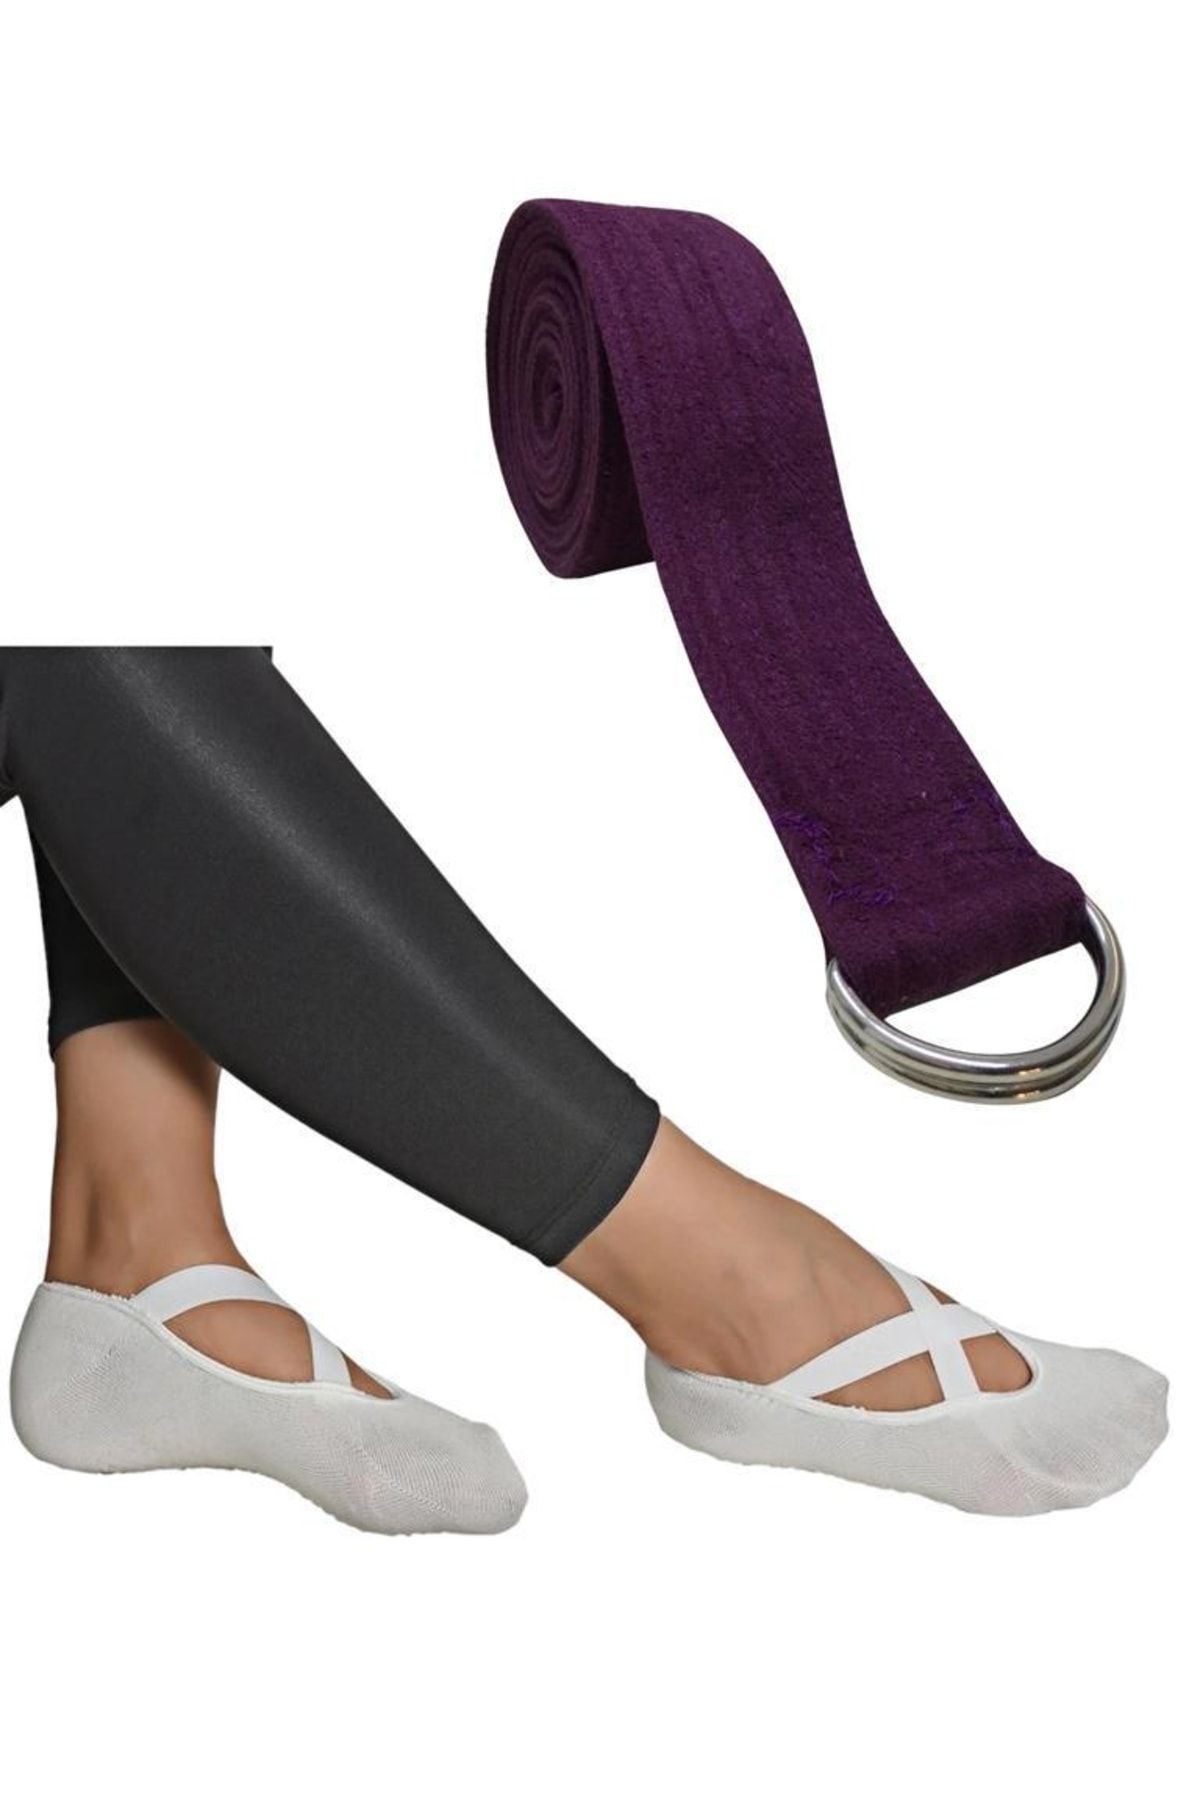 REMEGE Yoga Socks - Yoga Belt Set of Two / Non-Slip Pilates Socks